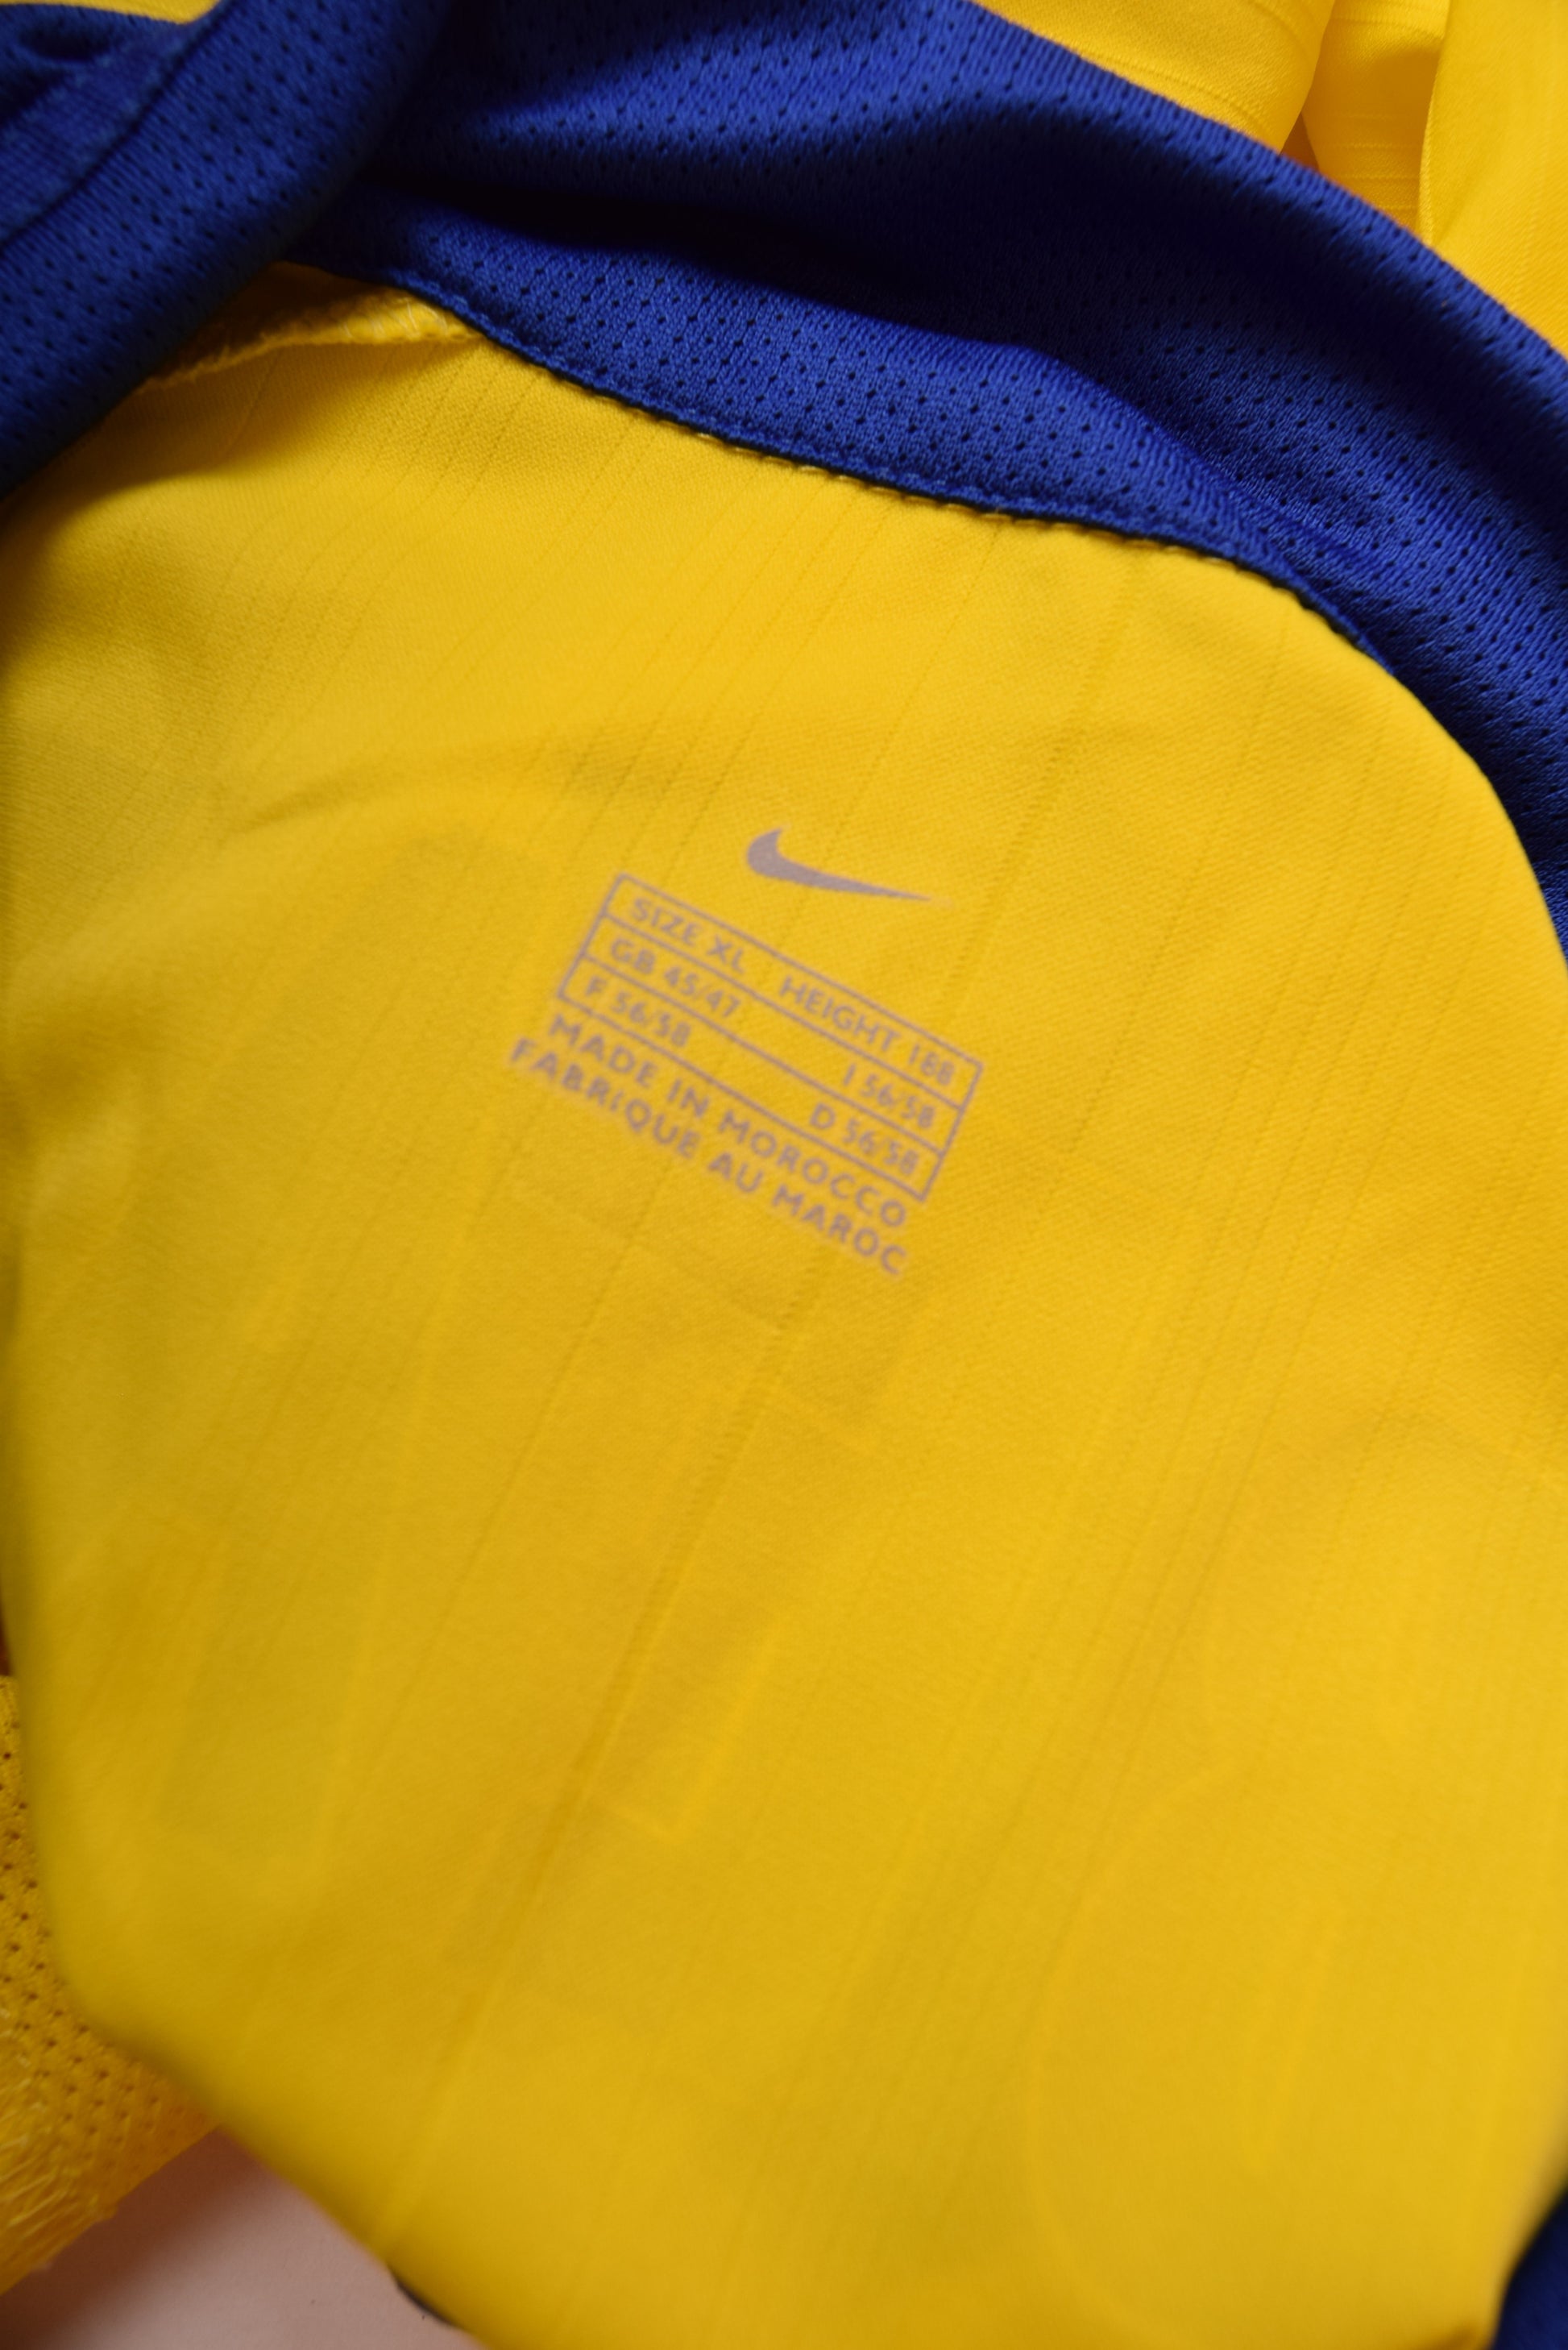 Arsenal Nike Football Shirt Third Away  '03 - '04 Size XL O2 04 Unbeatean Invincibles